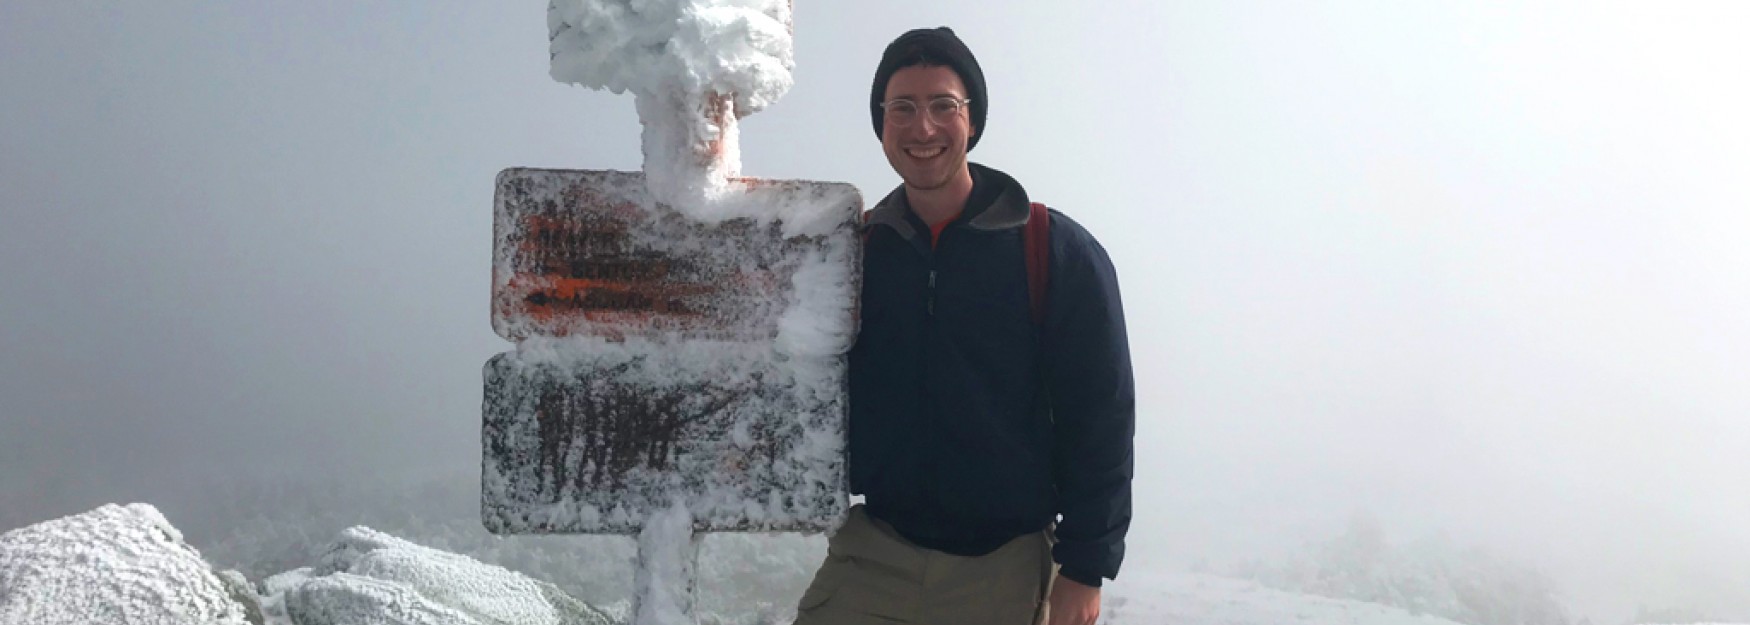 Mitchell Becker stands atop a snowy mountain in deep fog